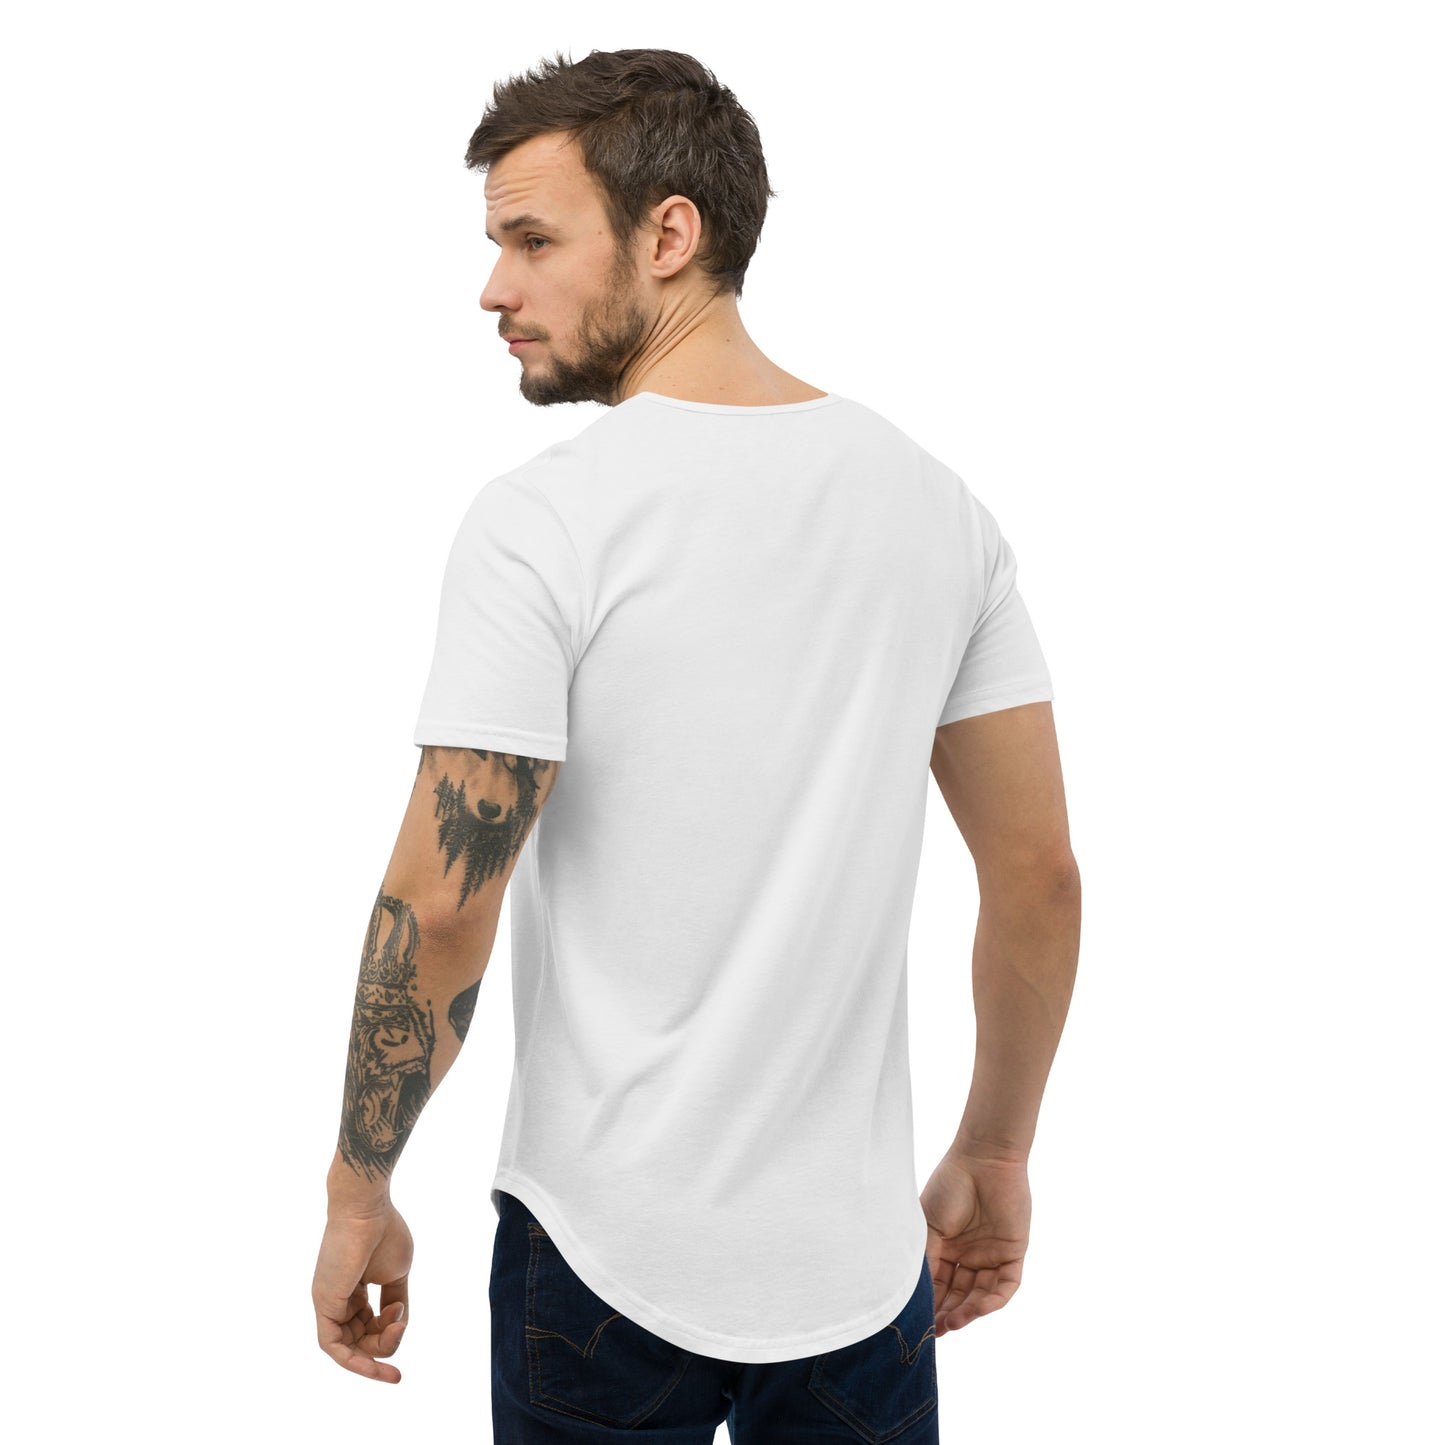 Flow Curved Hem T-Shirt White